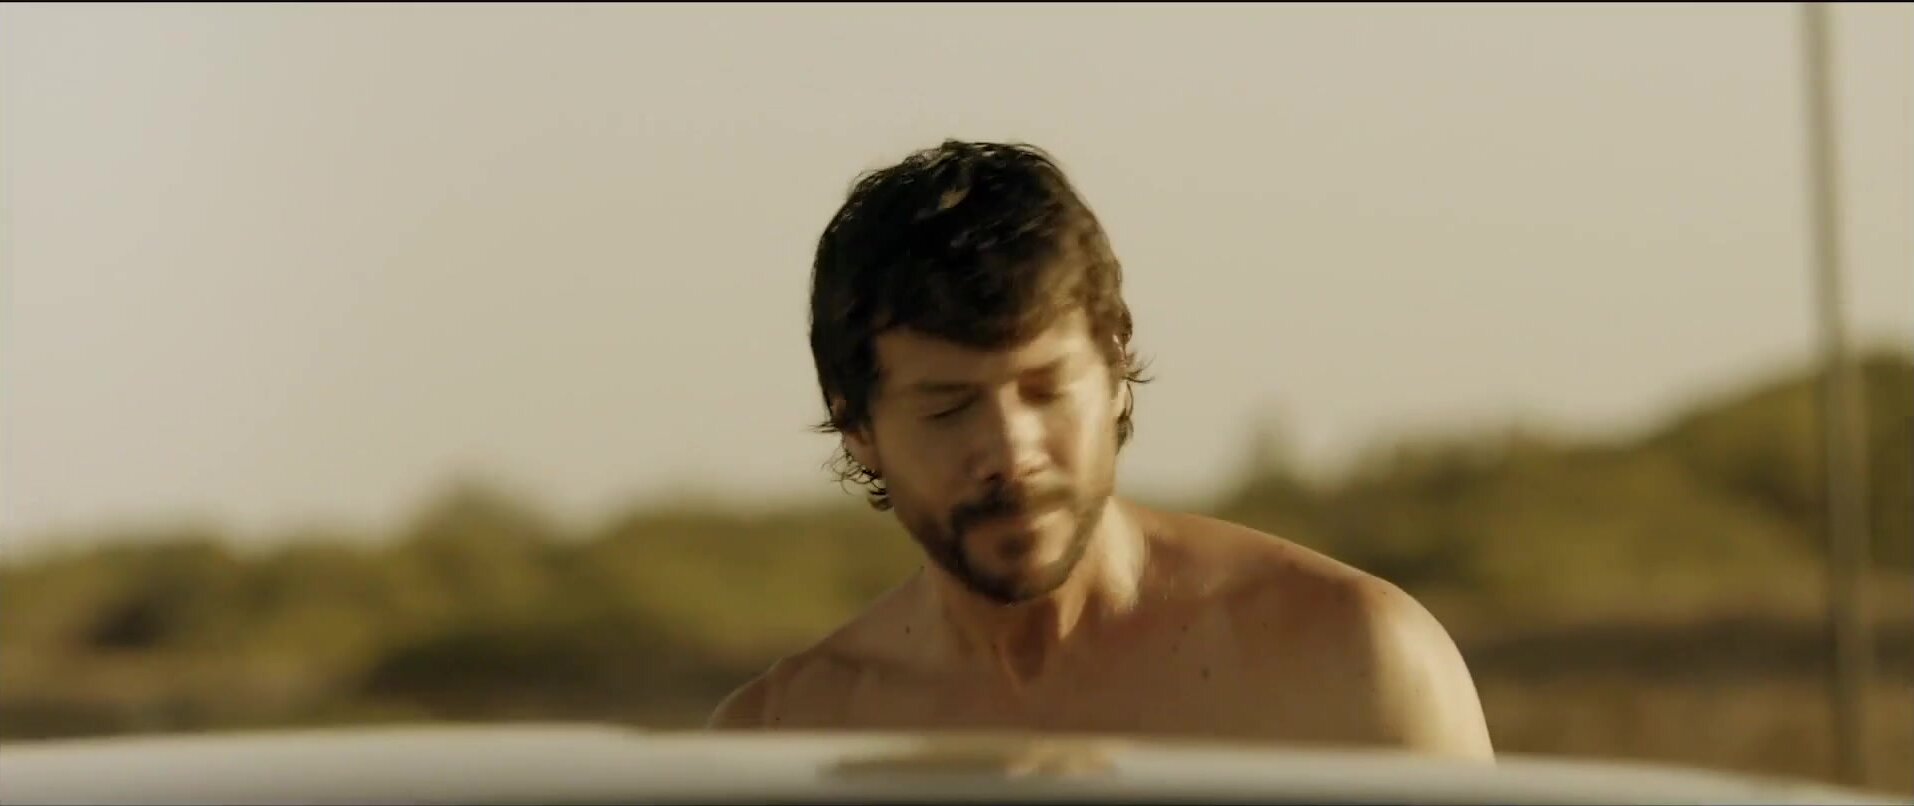 Hot Spanish actor nude beach